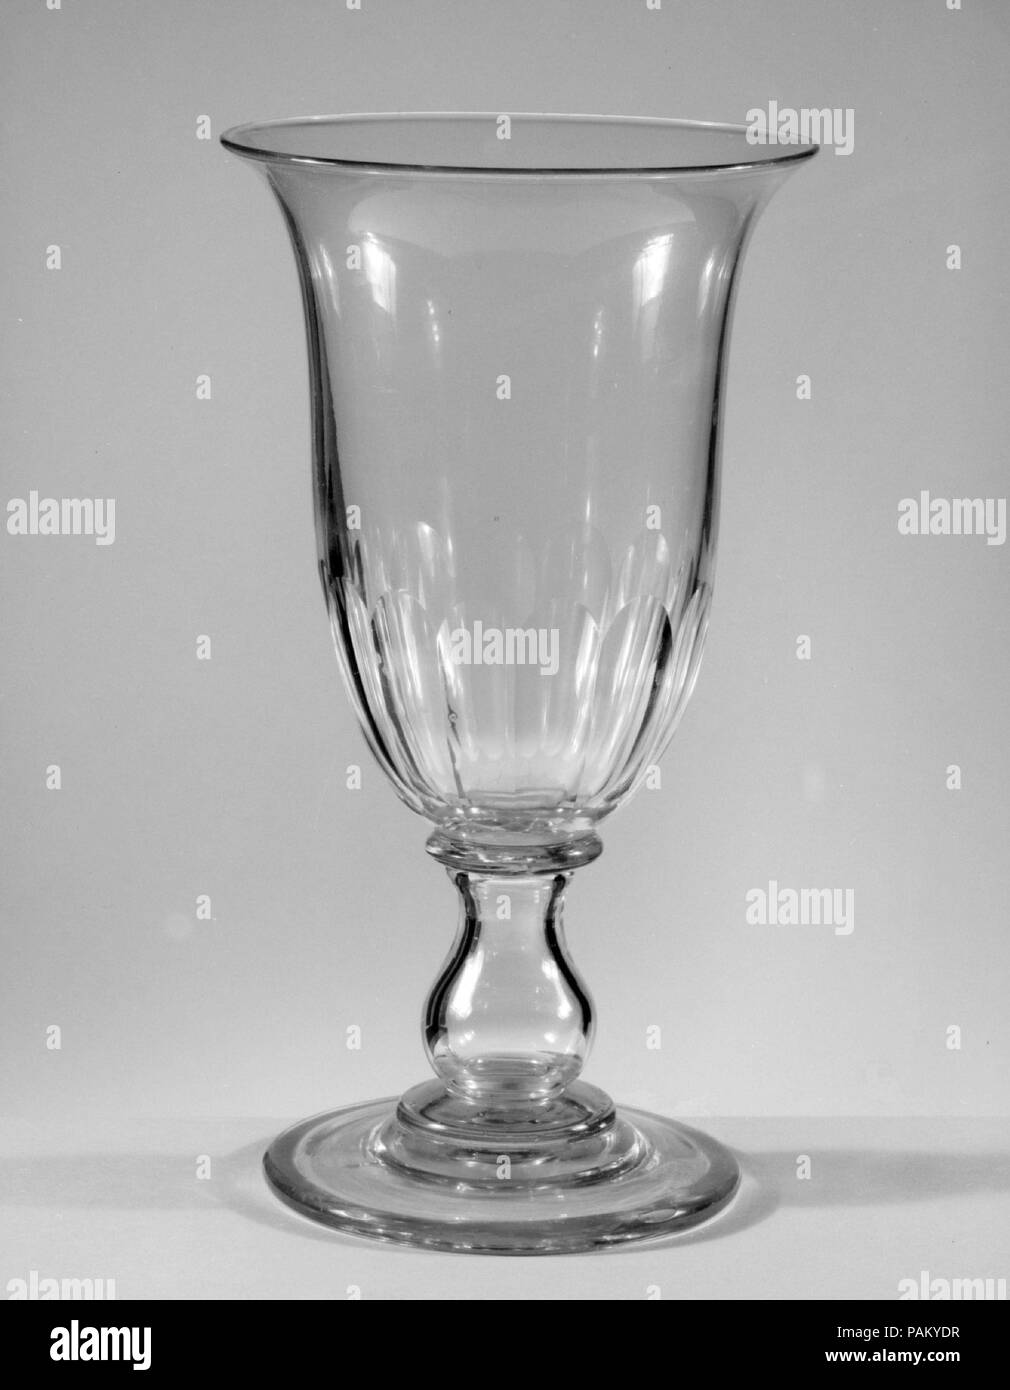 Celery Vase. Culture: American. Dimensions: H. 9 1/4 in. (23.5 cm); Diam. 5 5/16 in. (13.5 cm). Date: ca. 1850. Museum: Metropolitan Museum of Art, New York, USA. Stock Photo